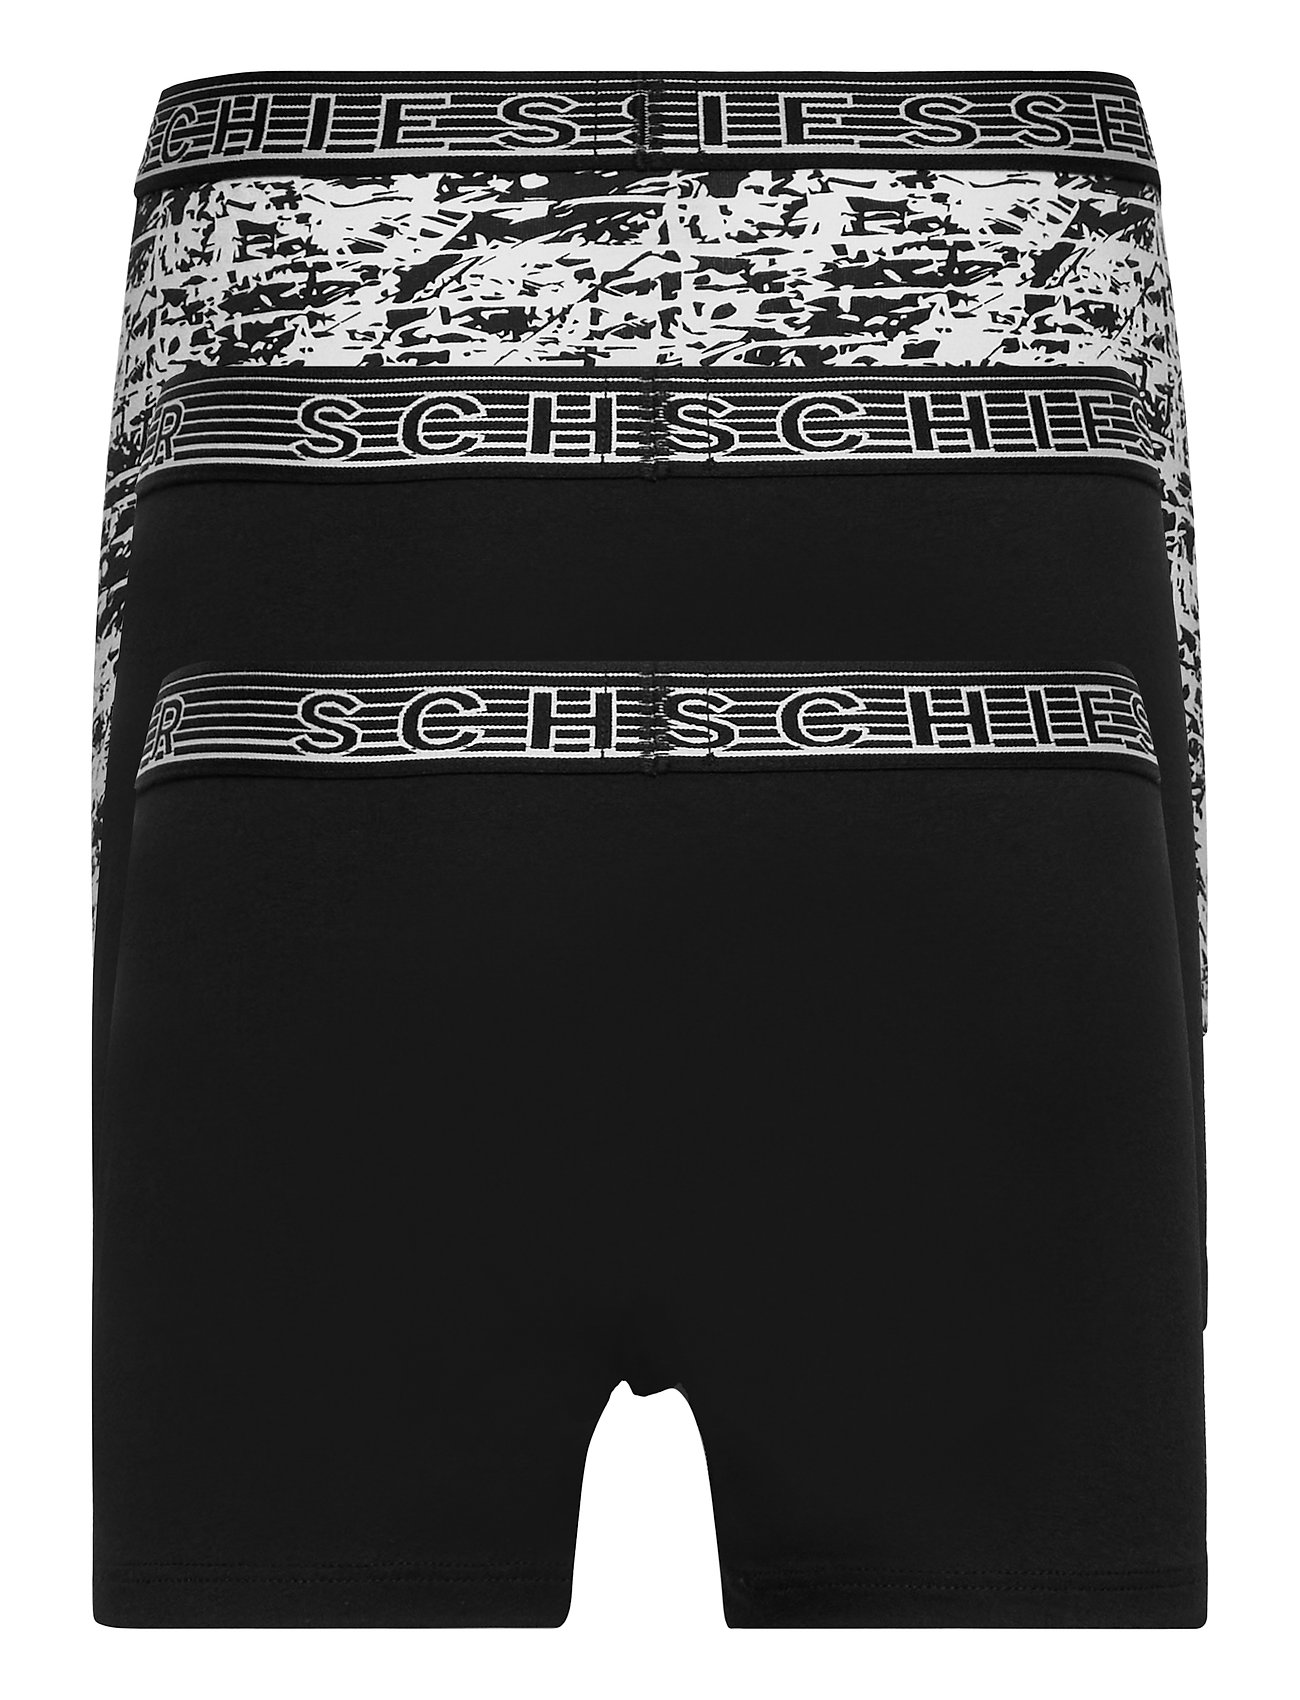 Schiesser - Shorts - apatinės kelnaitės - assorted 2 - 1